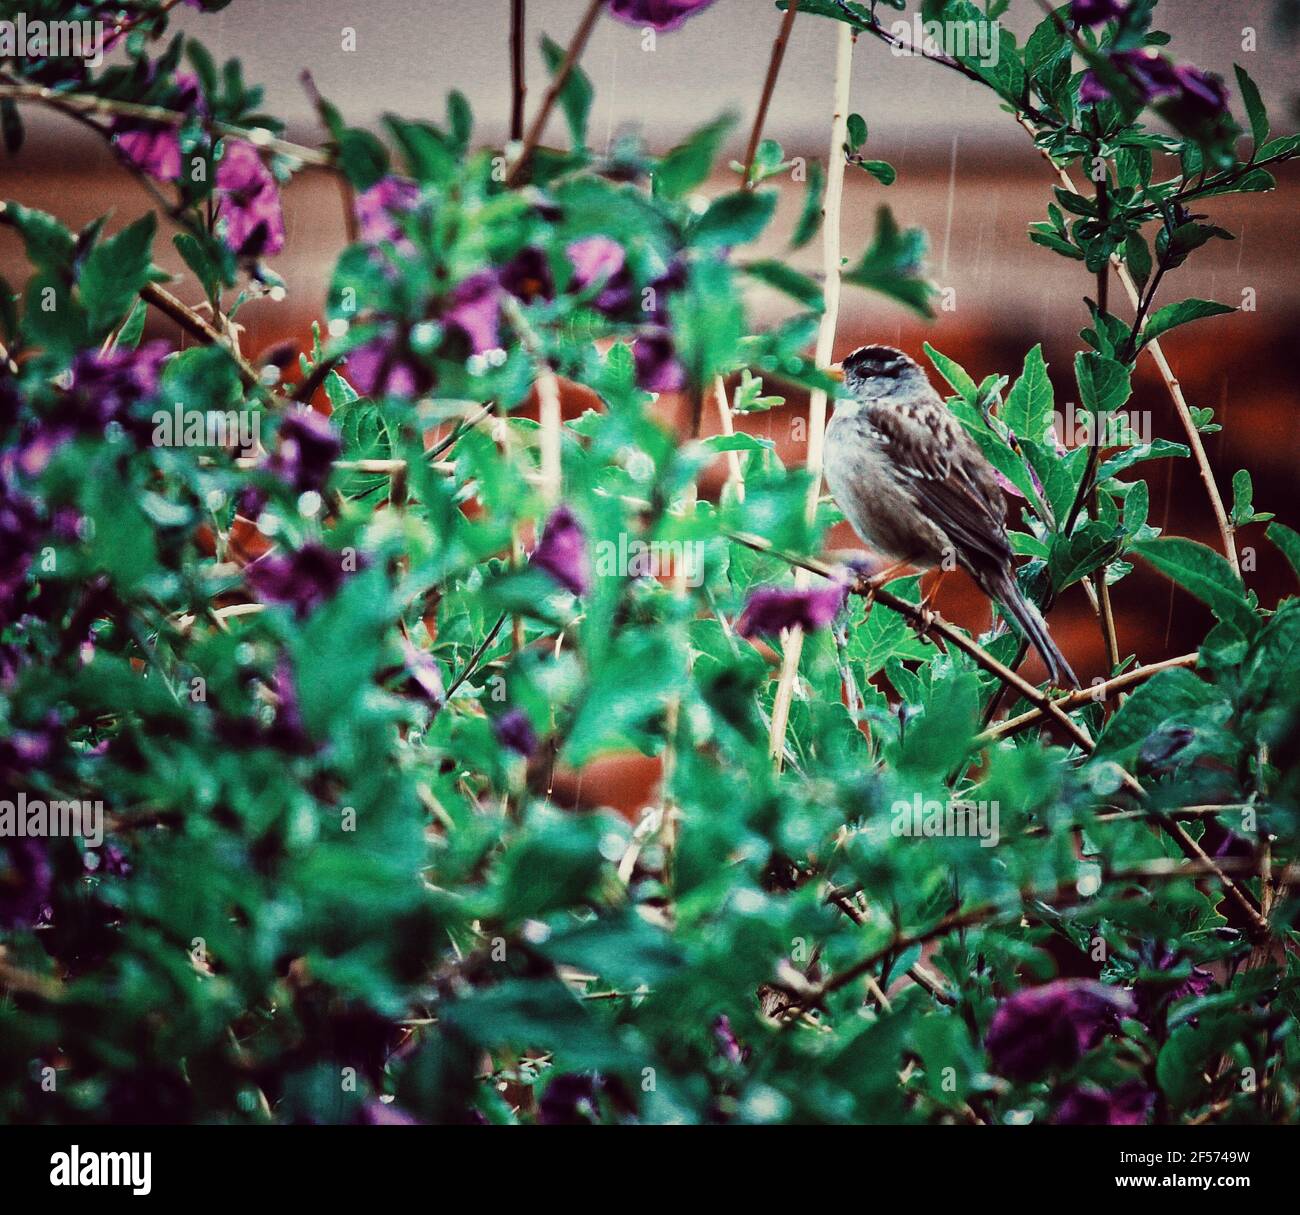 A bird in a flowery bush on a rainy day Stock Photo